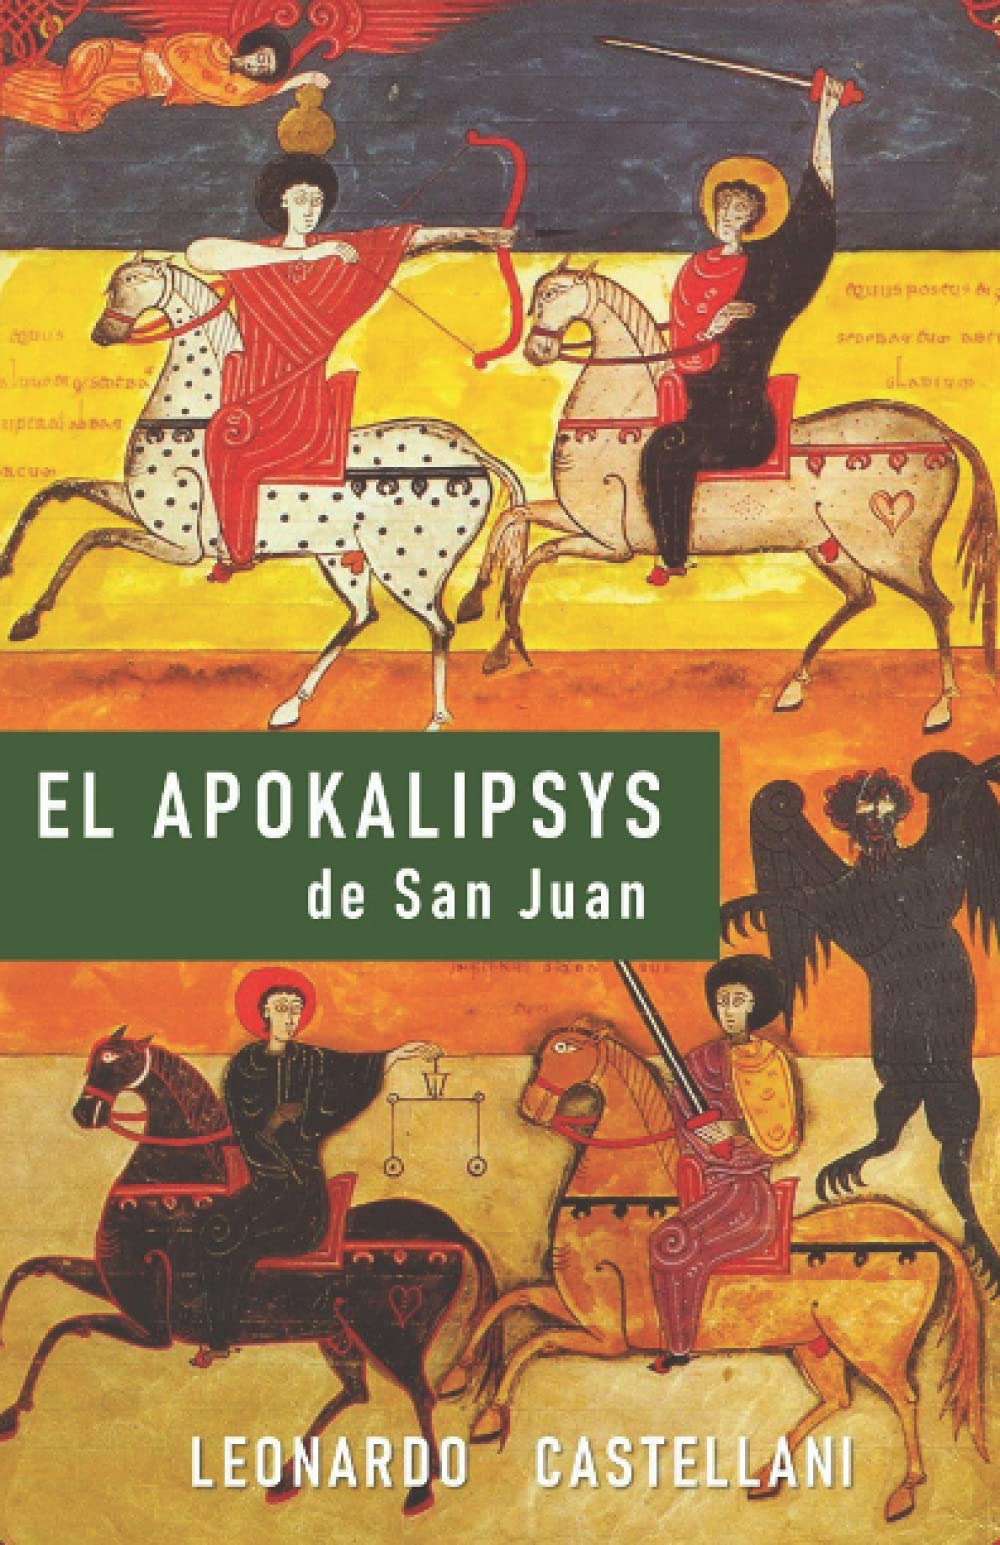 El Apokalipsys de San Juan (Spanish Edition)